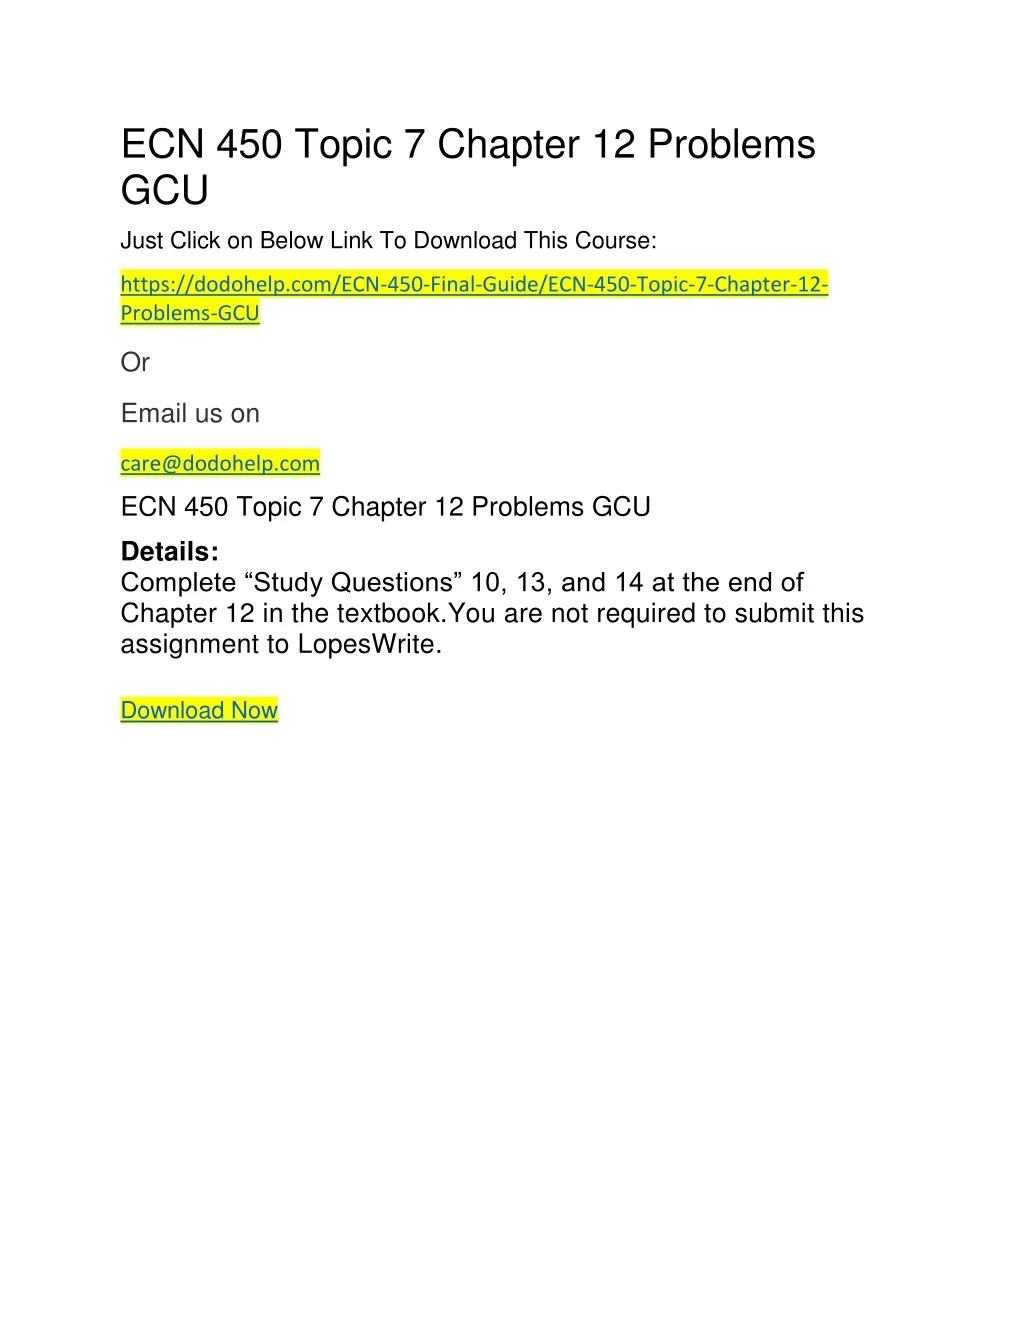 ecn 450 topic 7 chapter 12 problems gcu